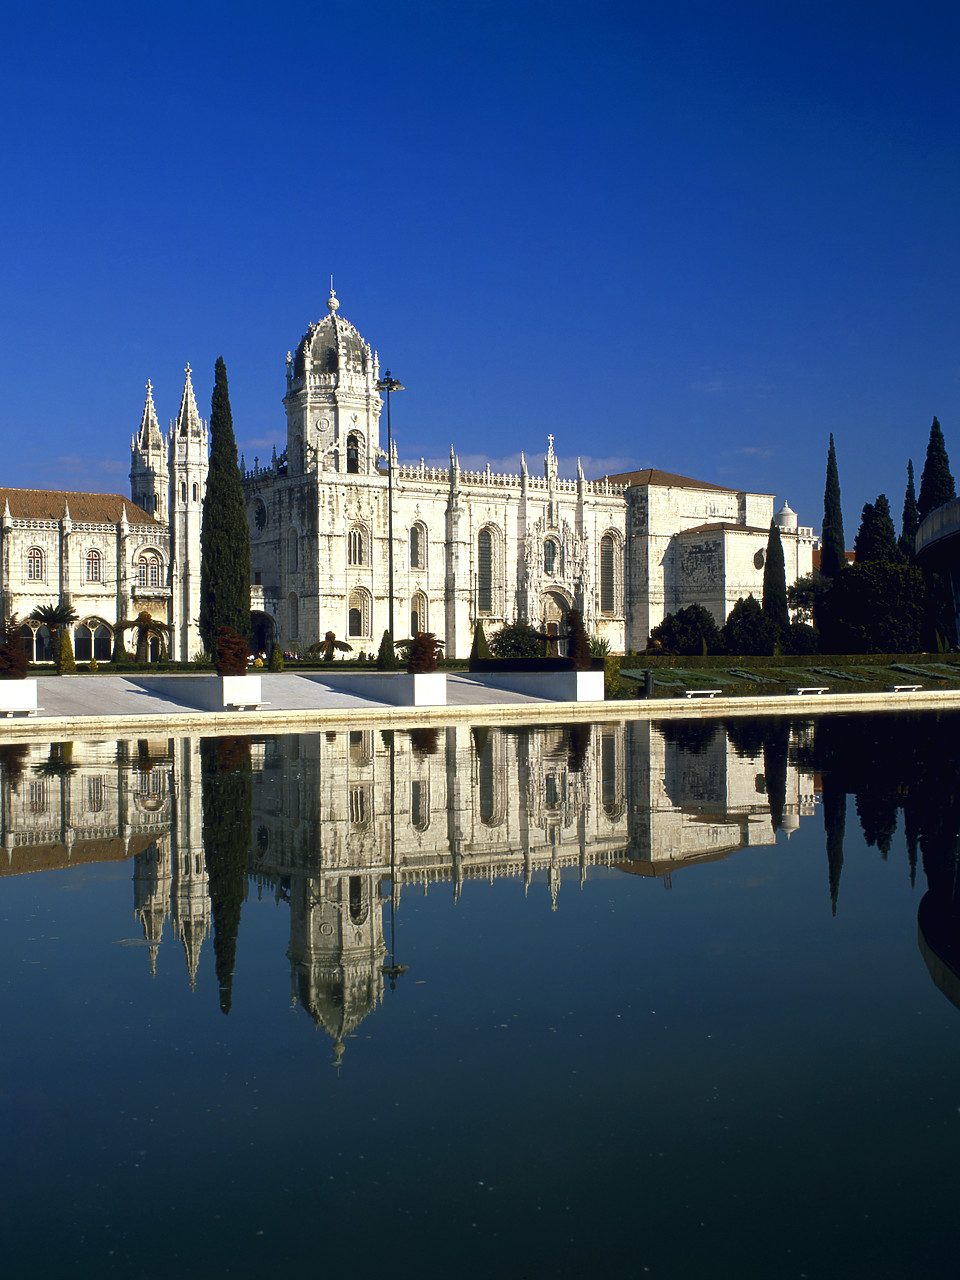 #060021-3 - Mosteiro dos Jeronimos, Lisbon, Portugal